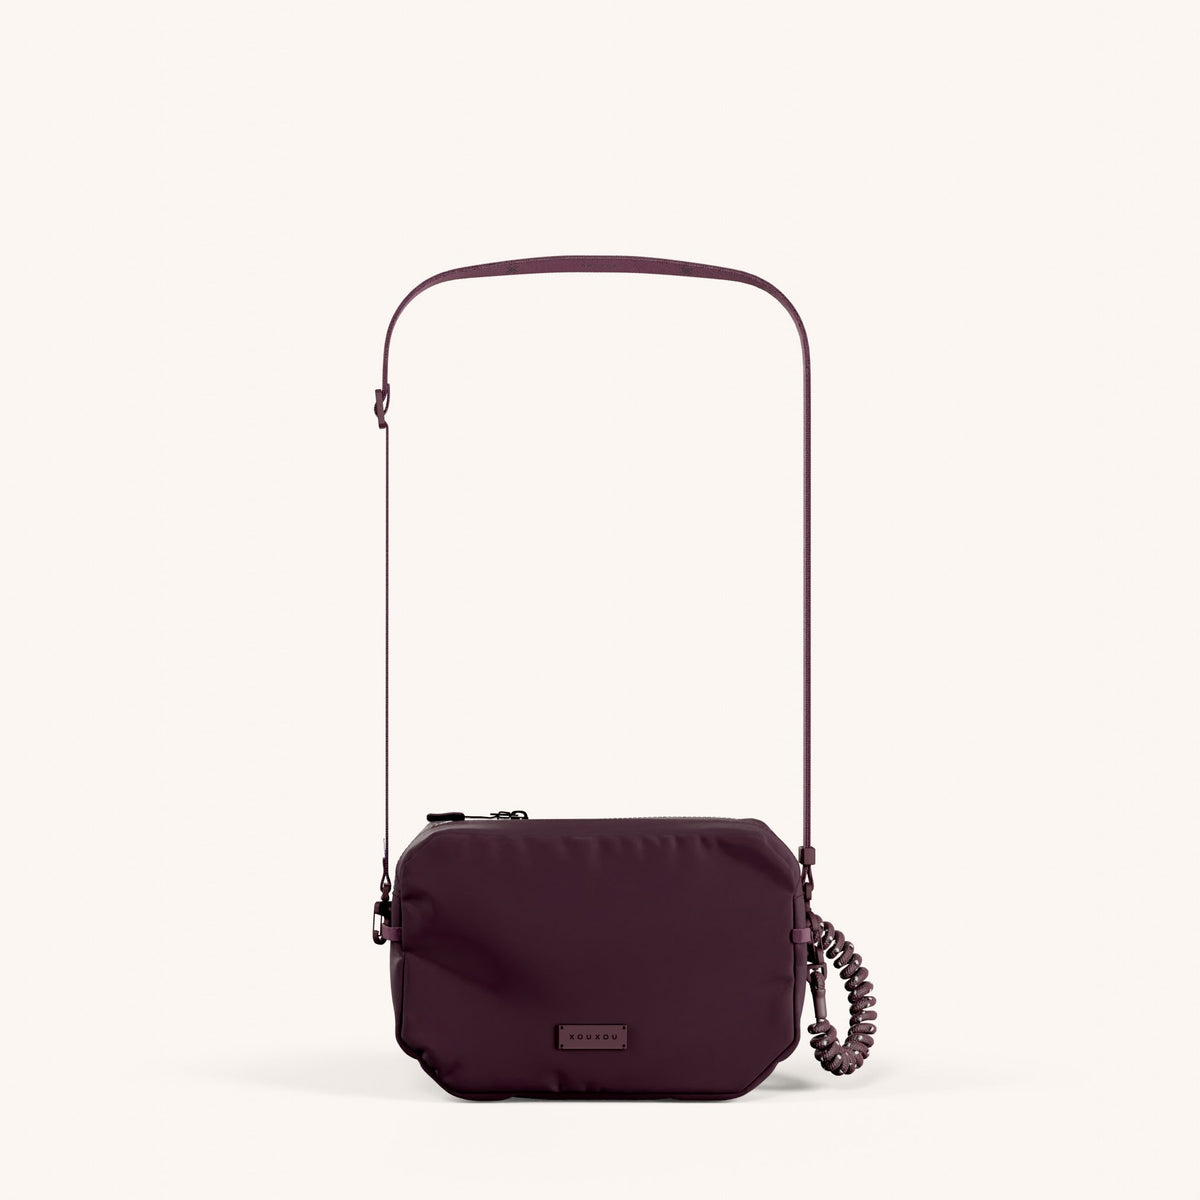 Crossbody Bag with Slim Lanyard in Burgundy Total View | XOUXOU